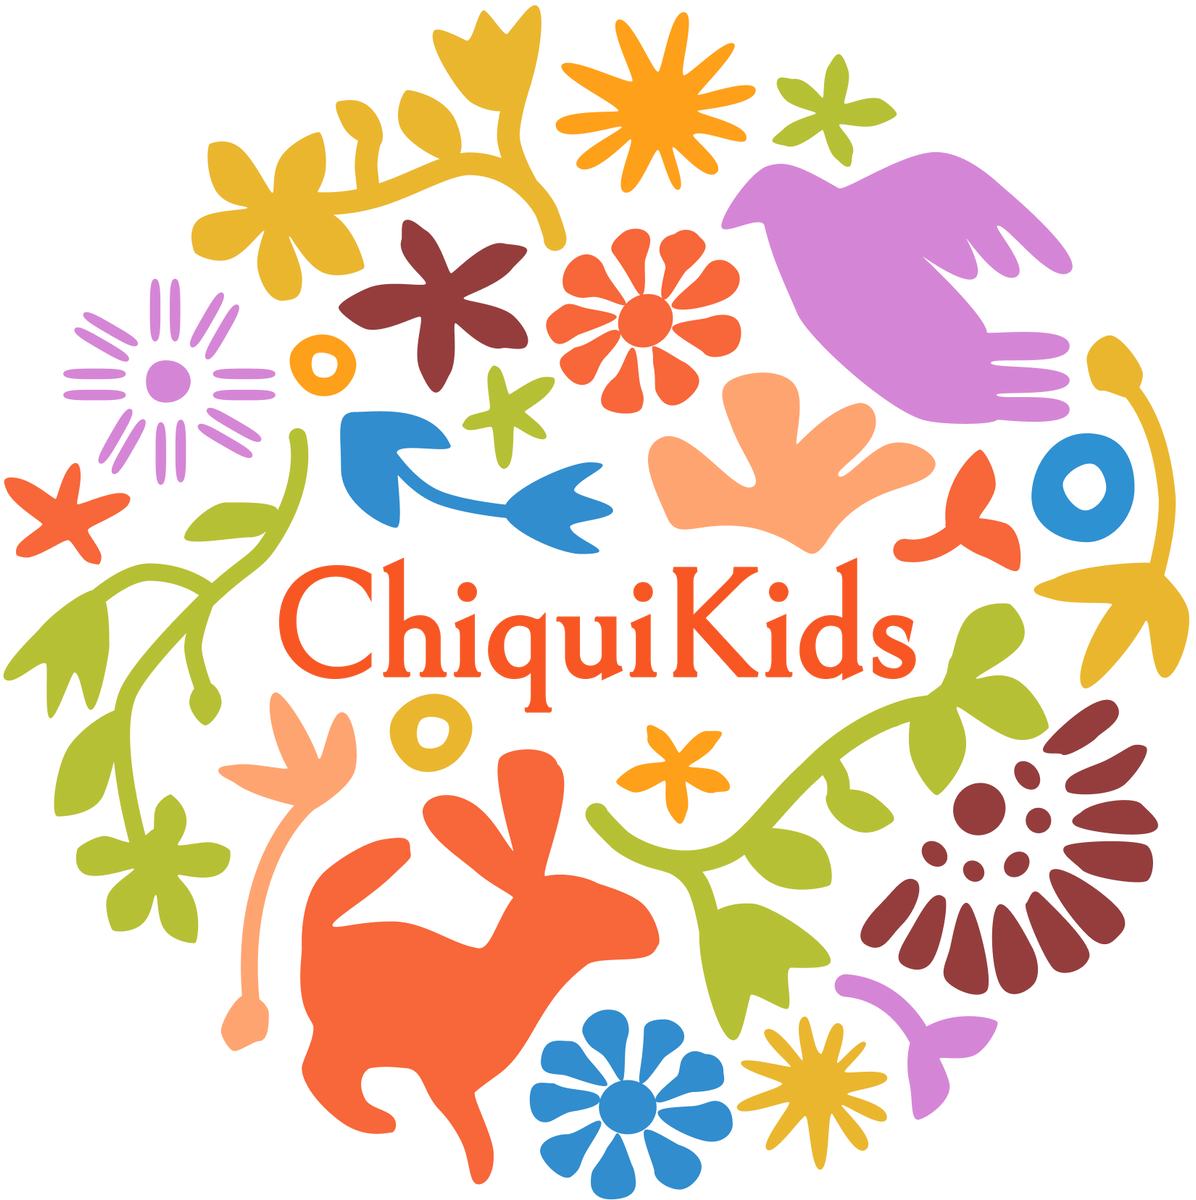 ChiquiKids circular pattern logo